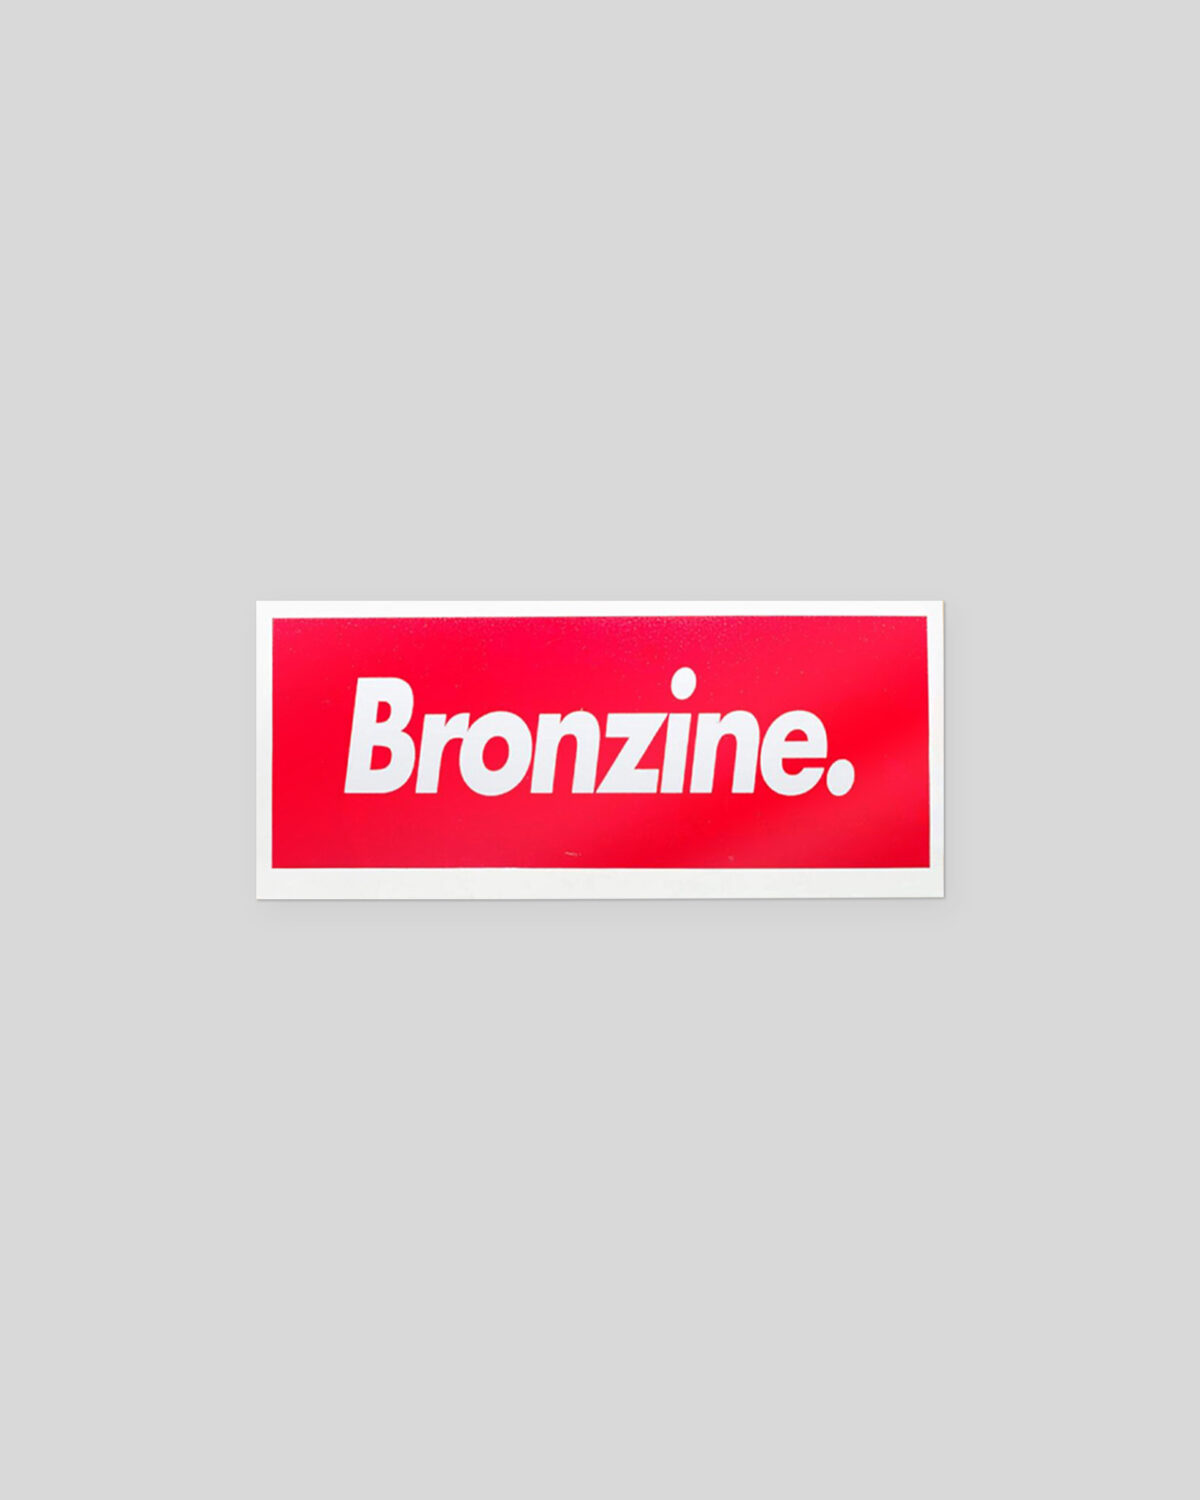 Patacco "Bronzine"